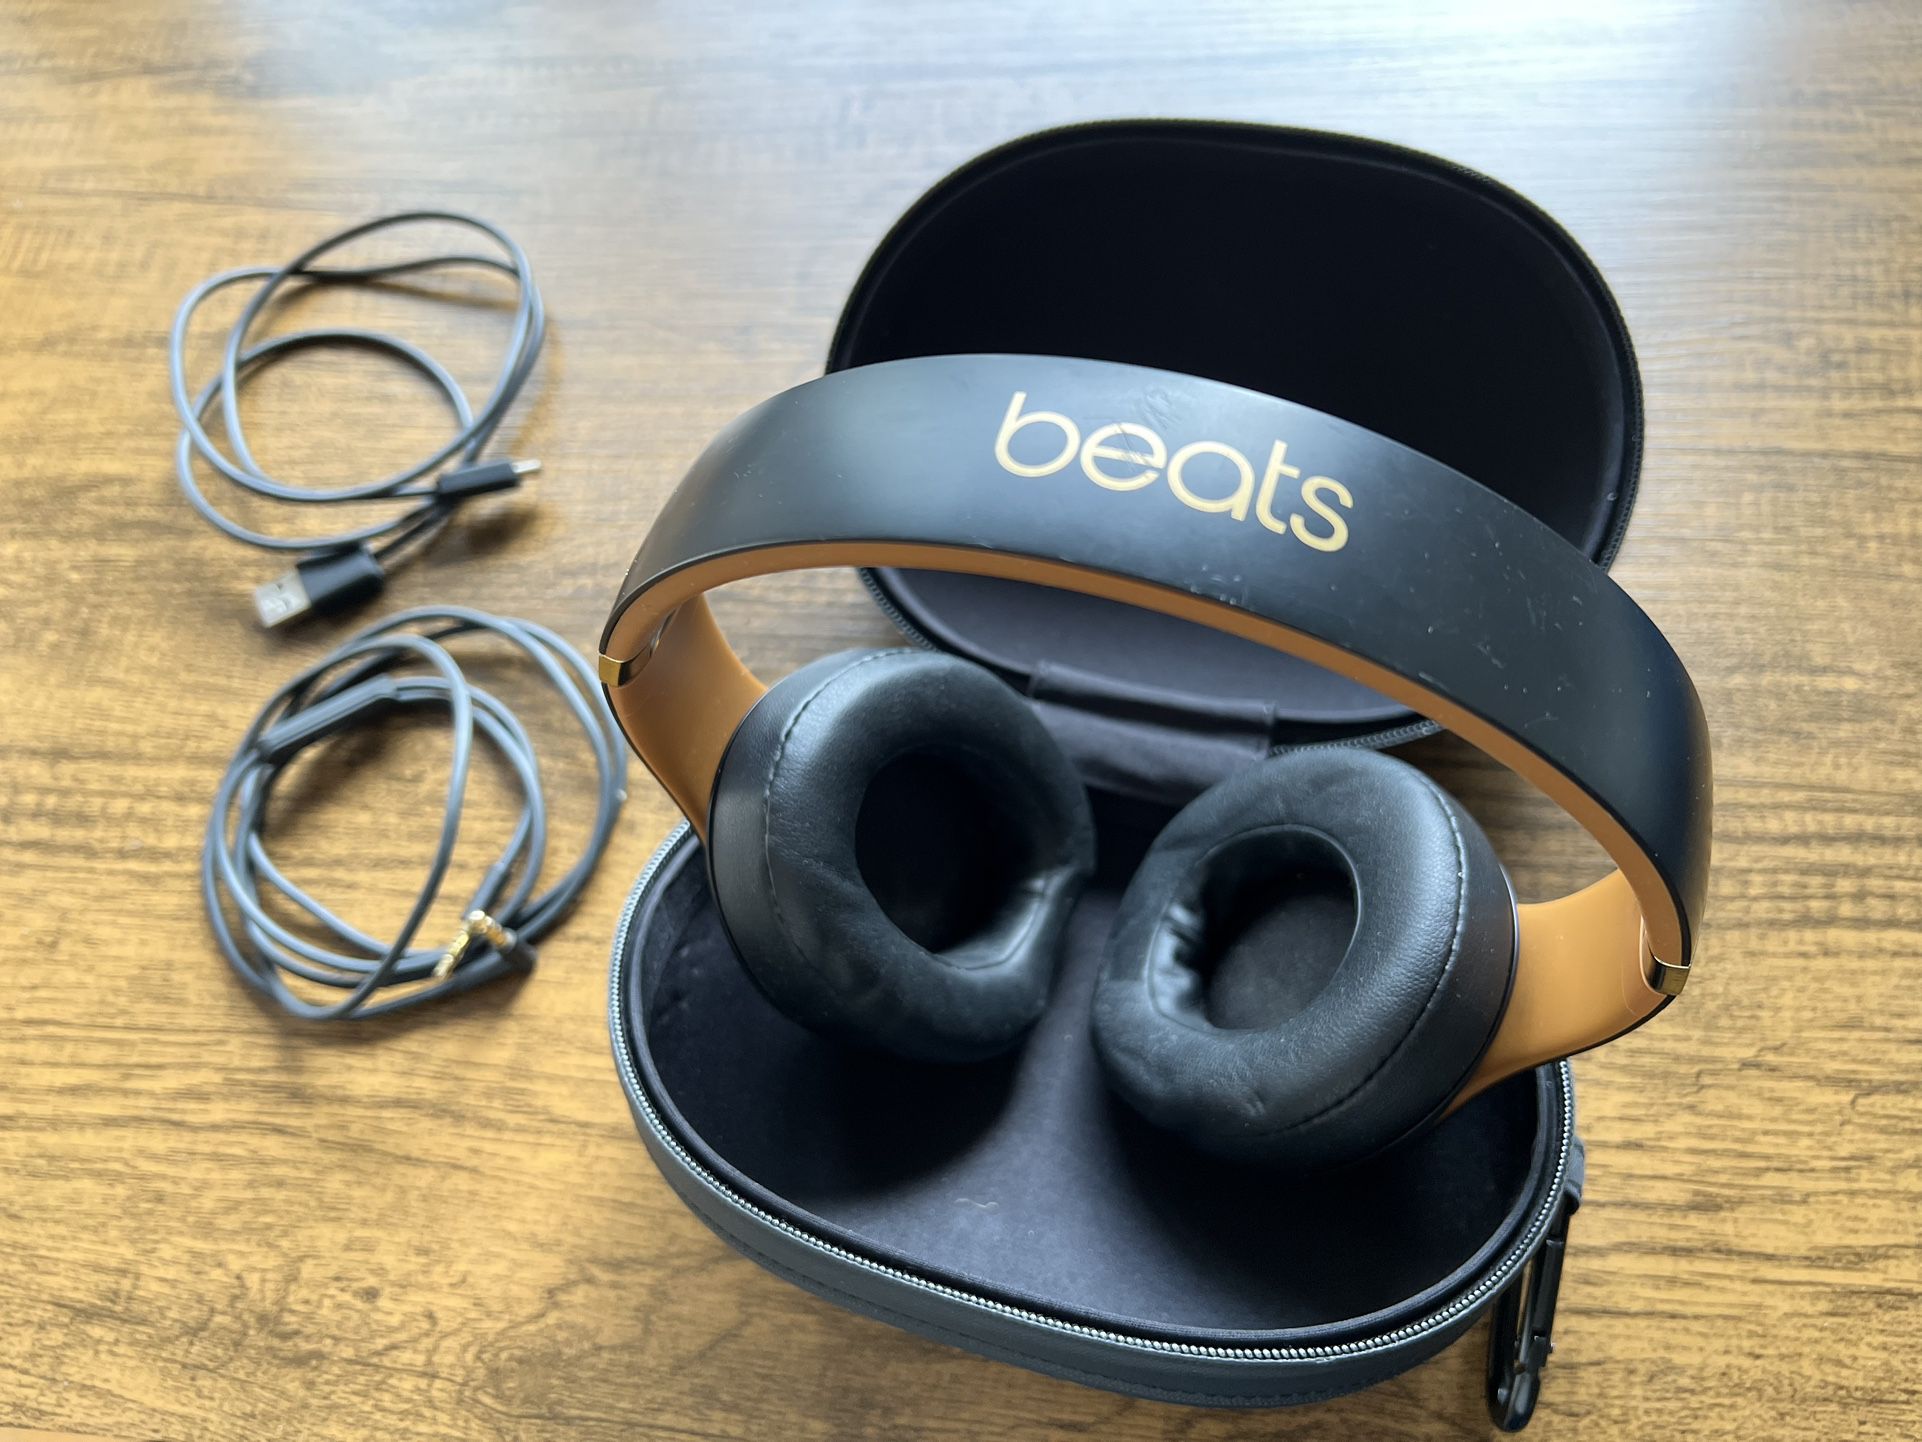 Beats Studio3 Wireless Headphones – The Beats Skyline Collection